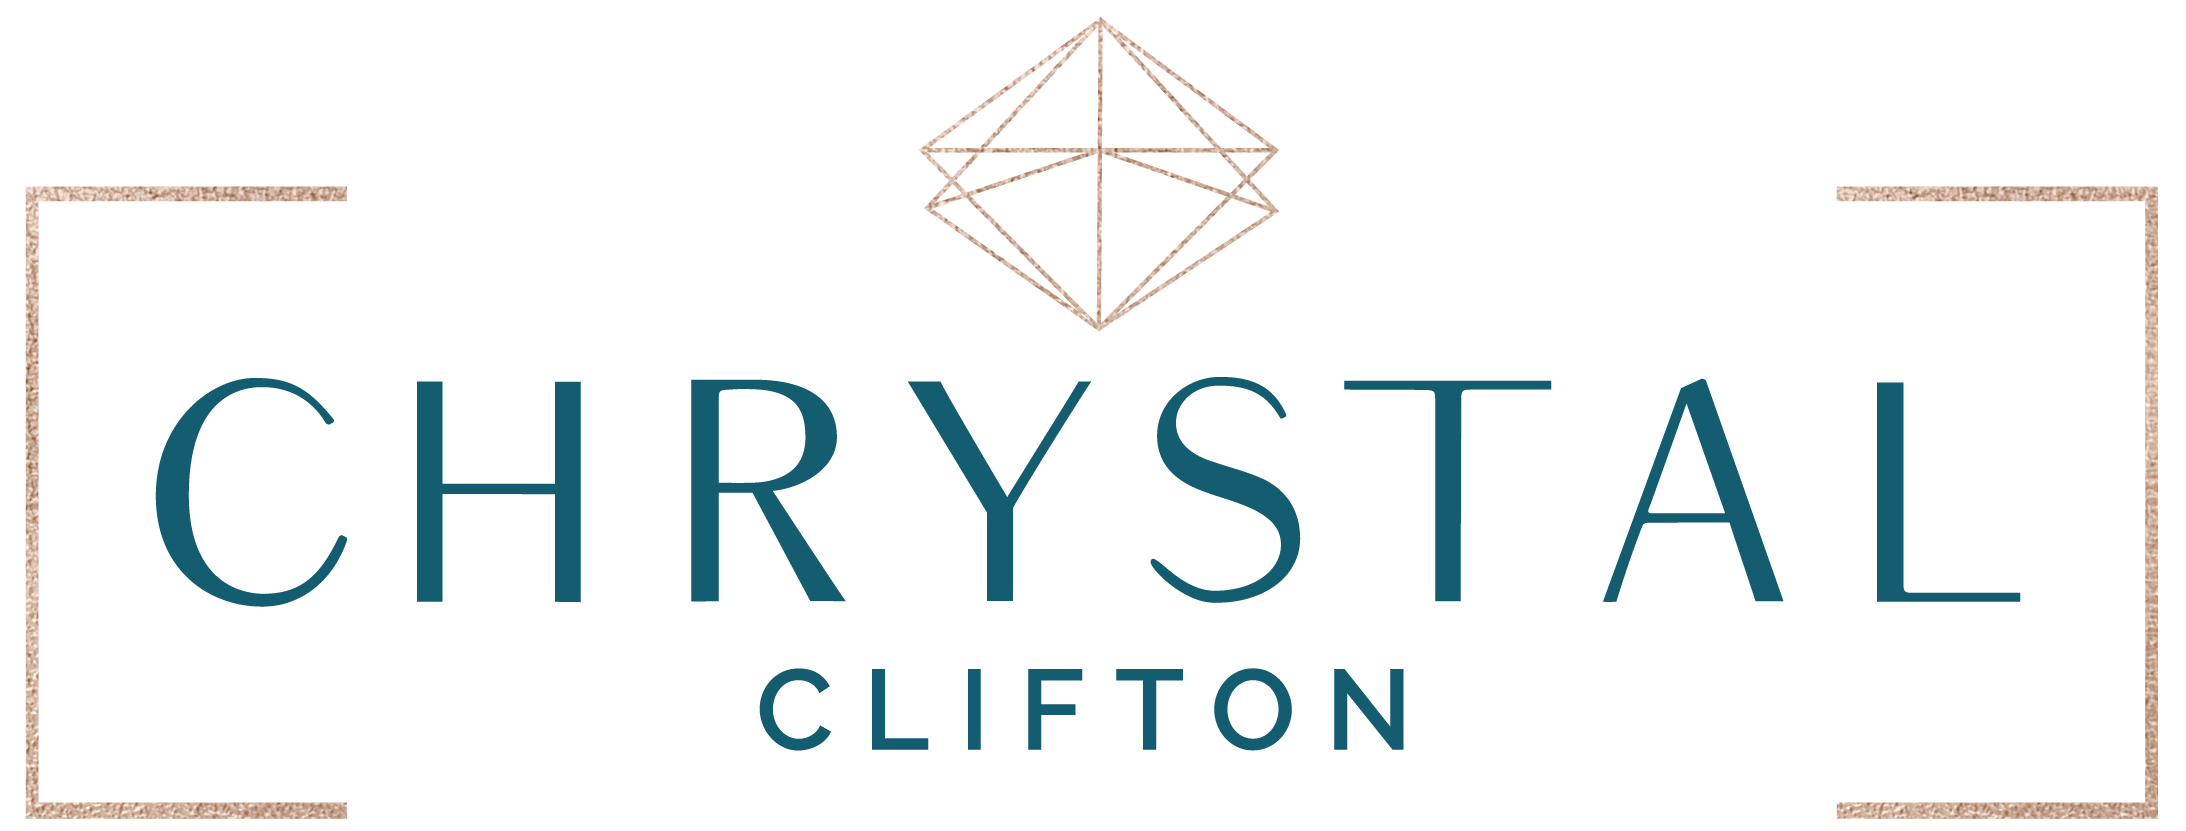 Chrystal Clifton logo